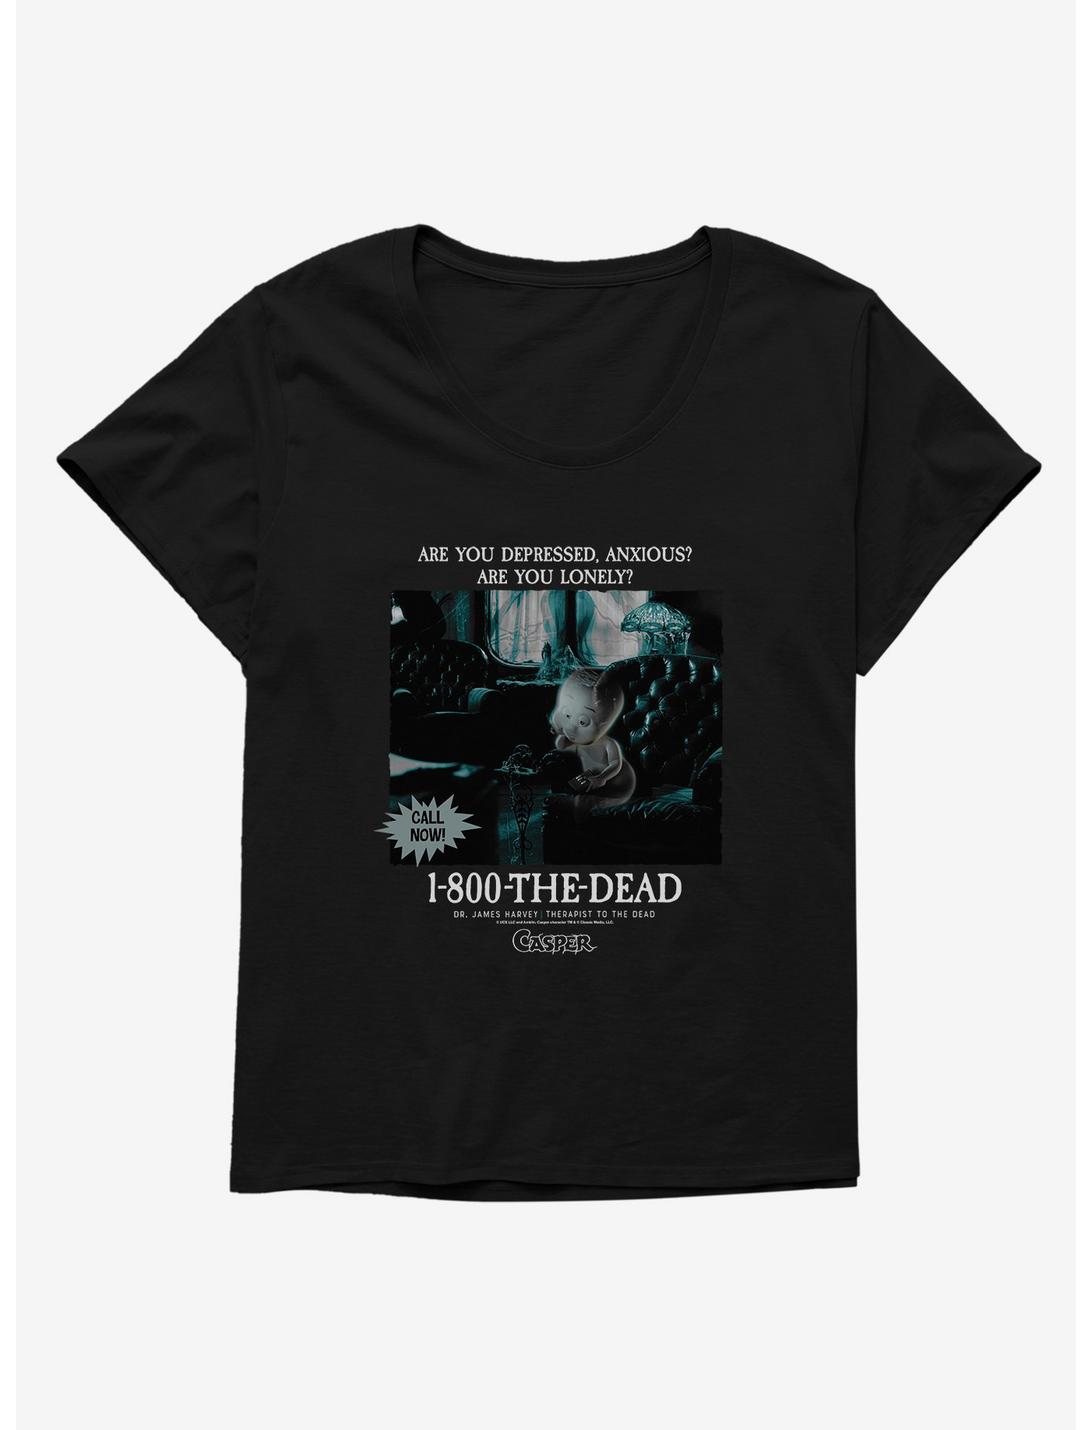 Casper 1-800-THE-DEAD Womens T-Shirt Plus Size, BLACK, hi-res